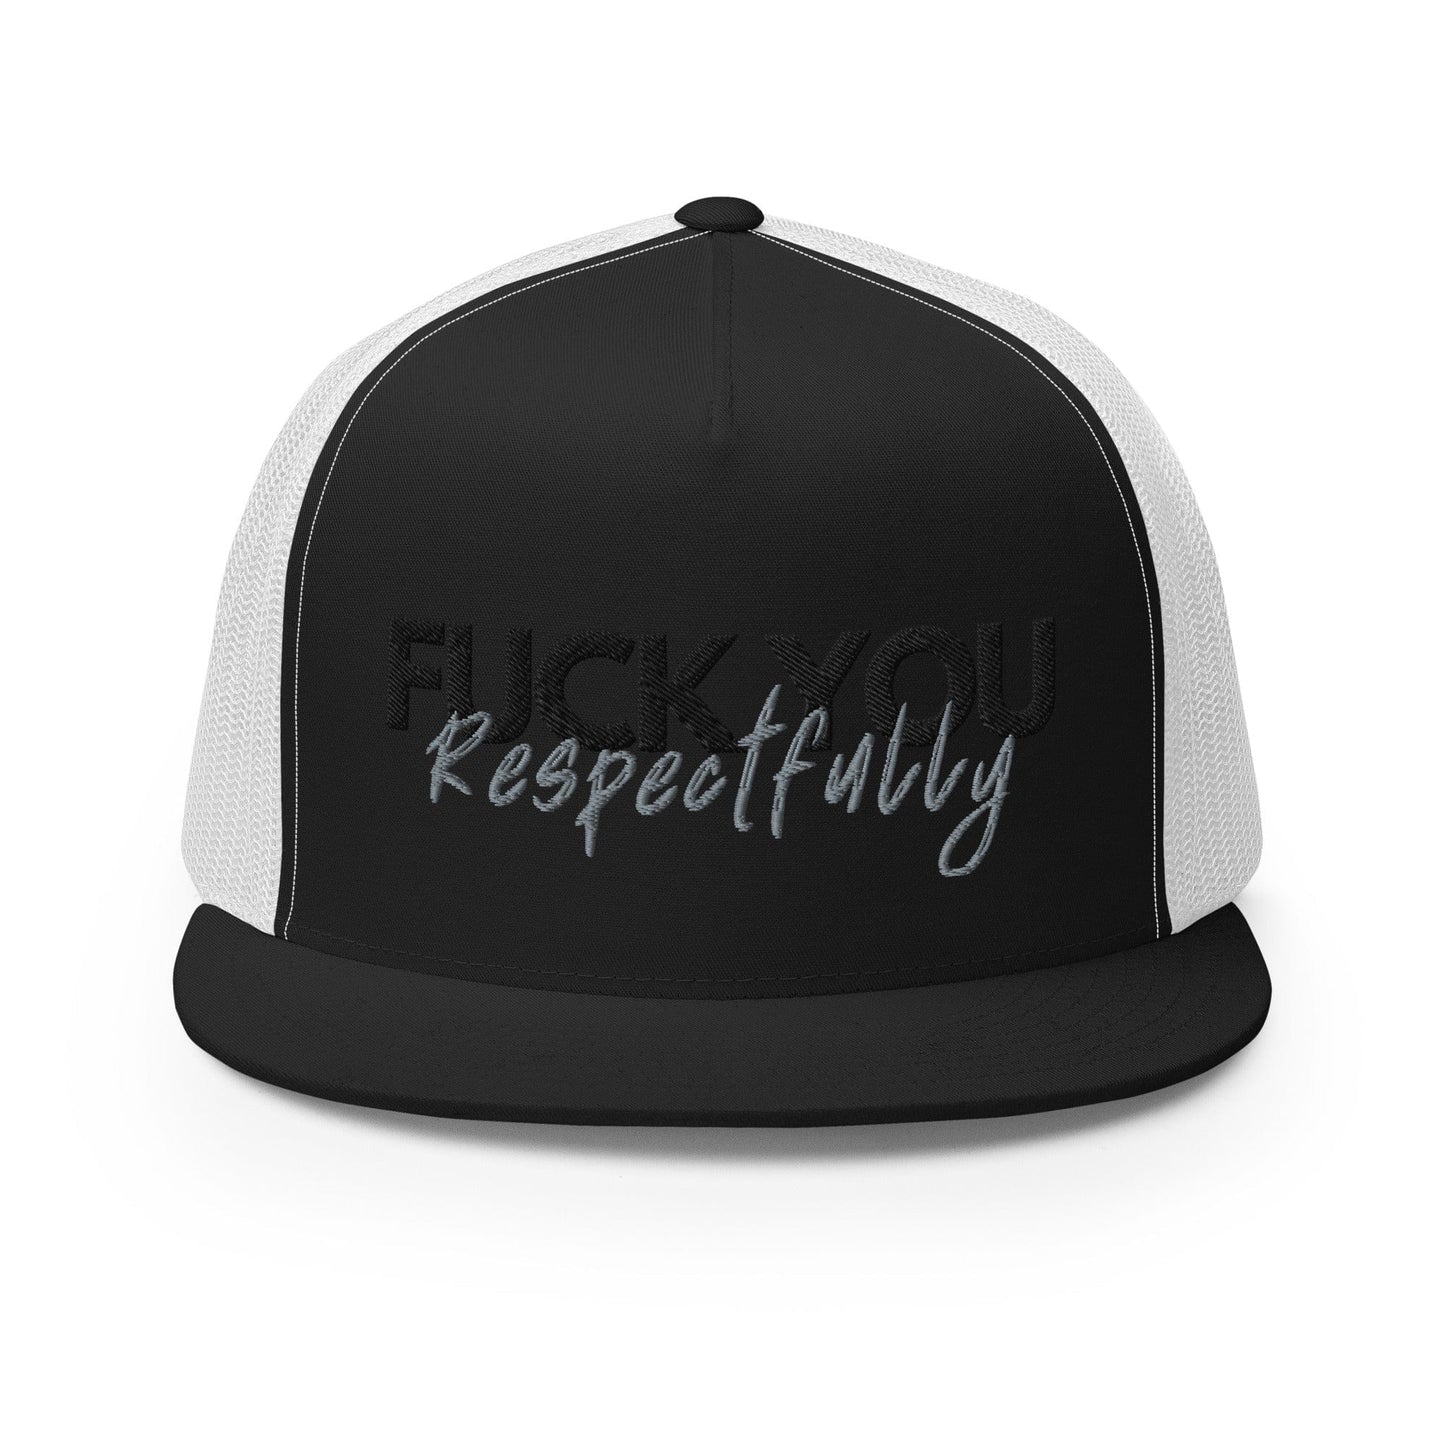 InsensitiviTees™️ Black/ White The Respectful Rebel Trucker Hat - 'F**k You, Respectfully' Edition